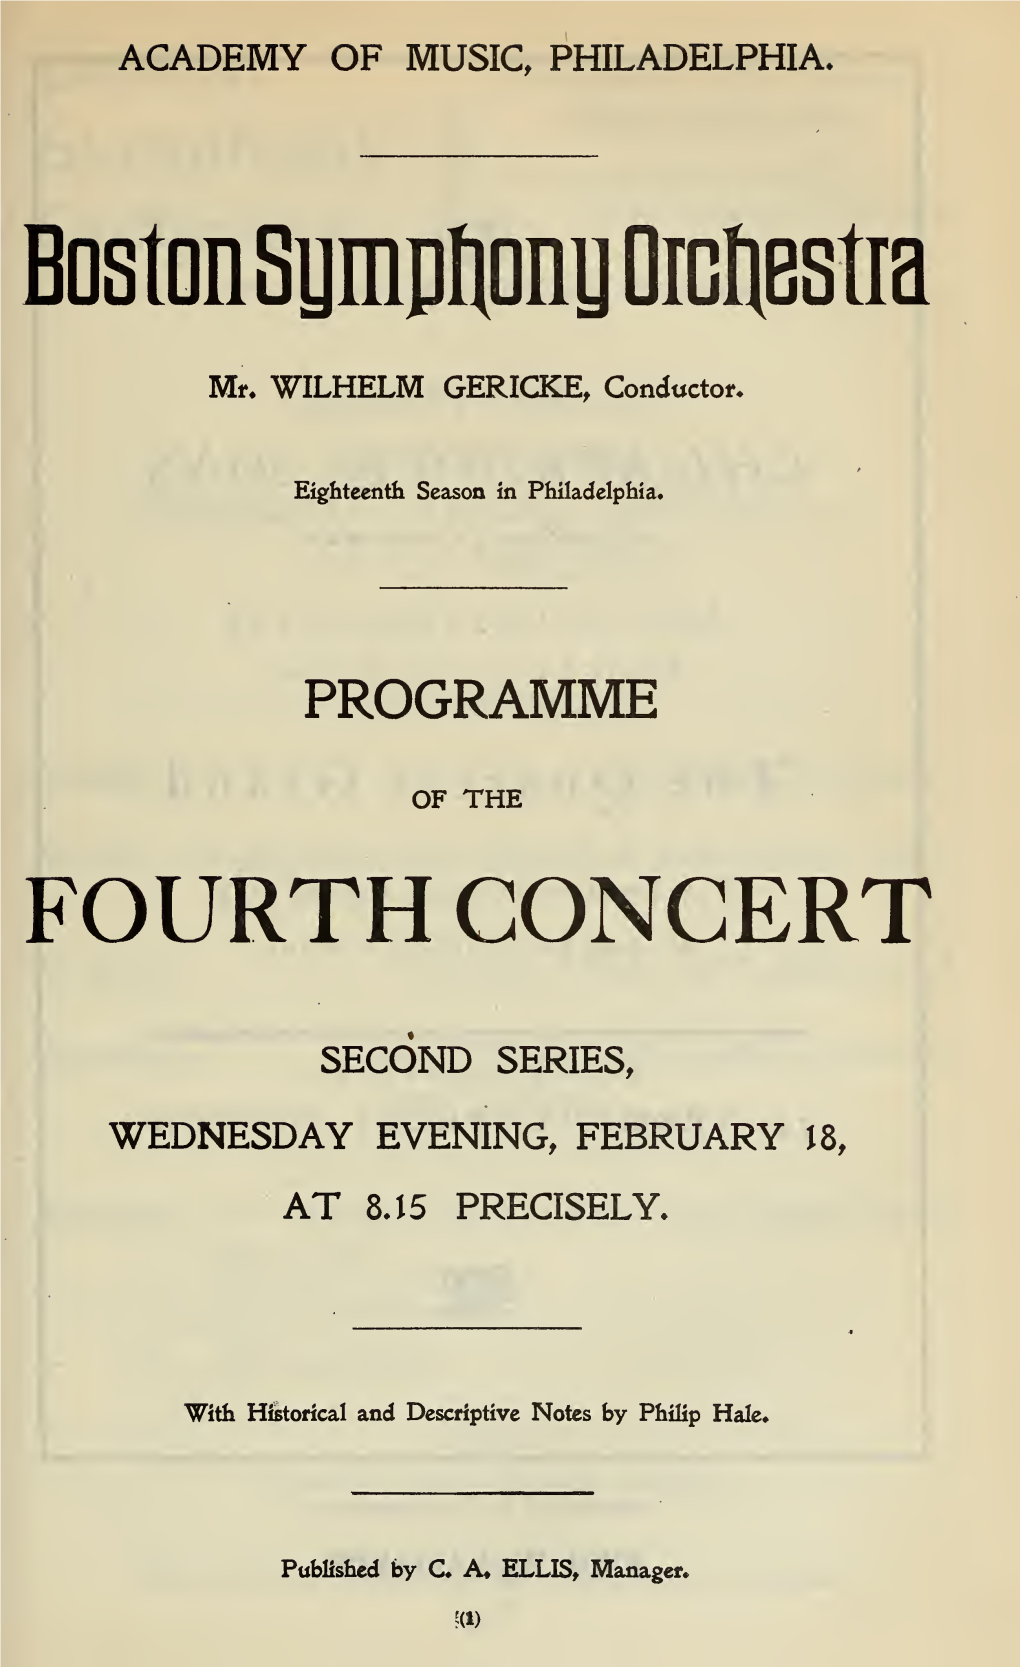 Boston Symphony Orchestra Concert Programs, Season 22,1902-1903, Trip